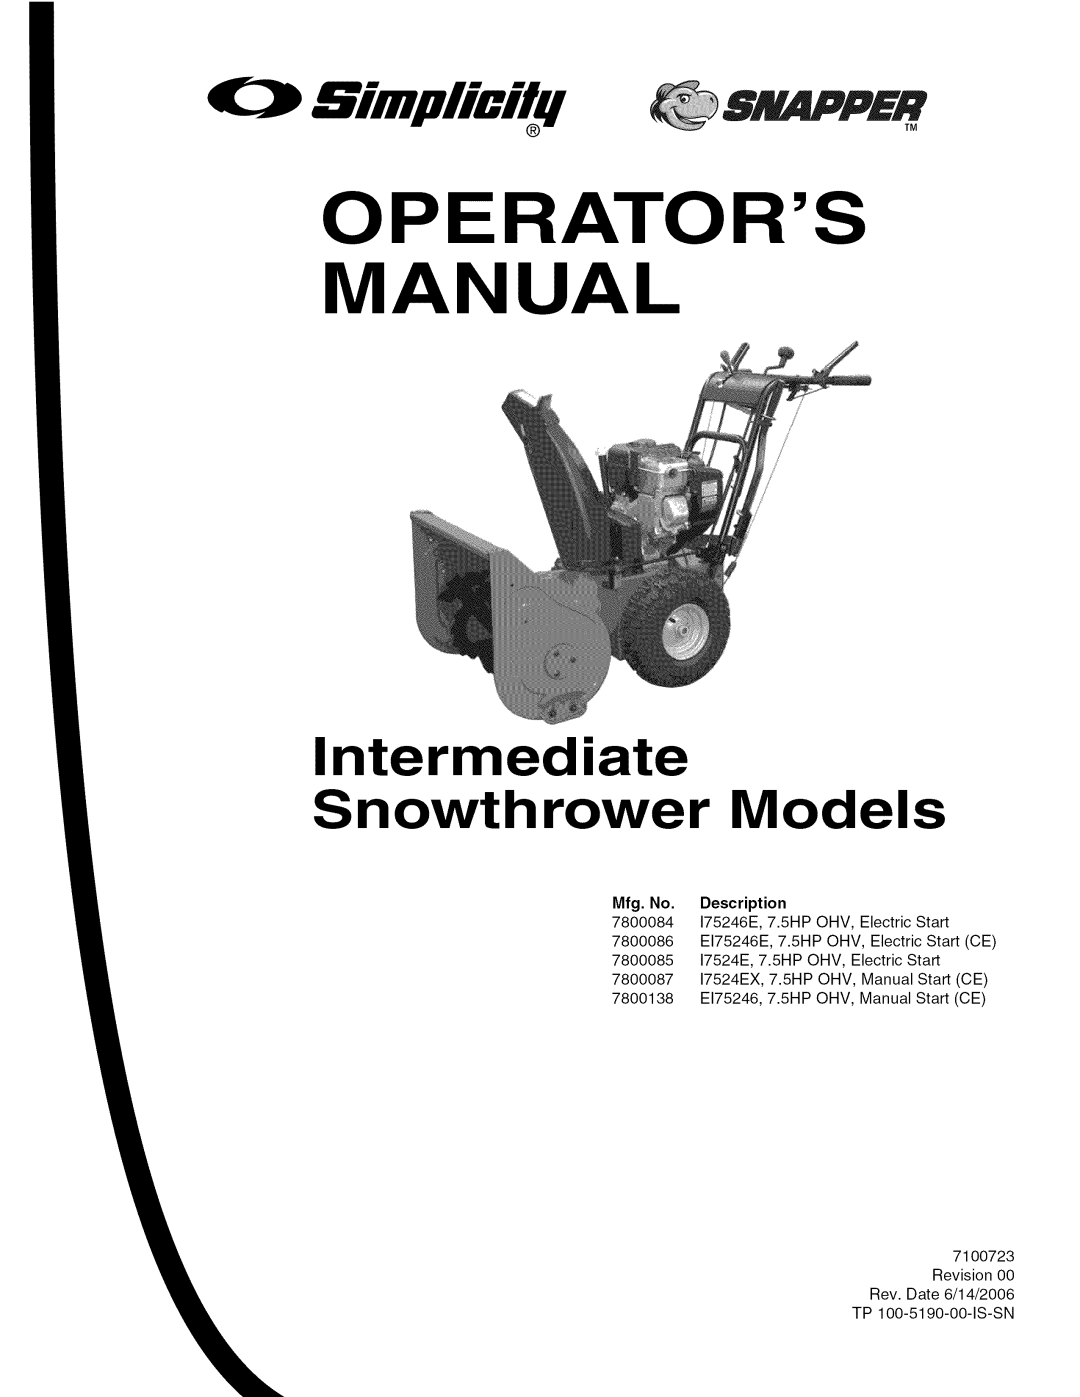 Simplicity 7800084, 7800085, 7800138, 7800086 manual Intermediate Snowthrower Models, Operators, MANUAl, Bimplicilq SNAPPER 